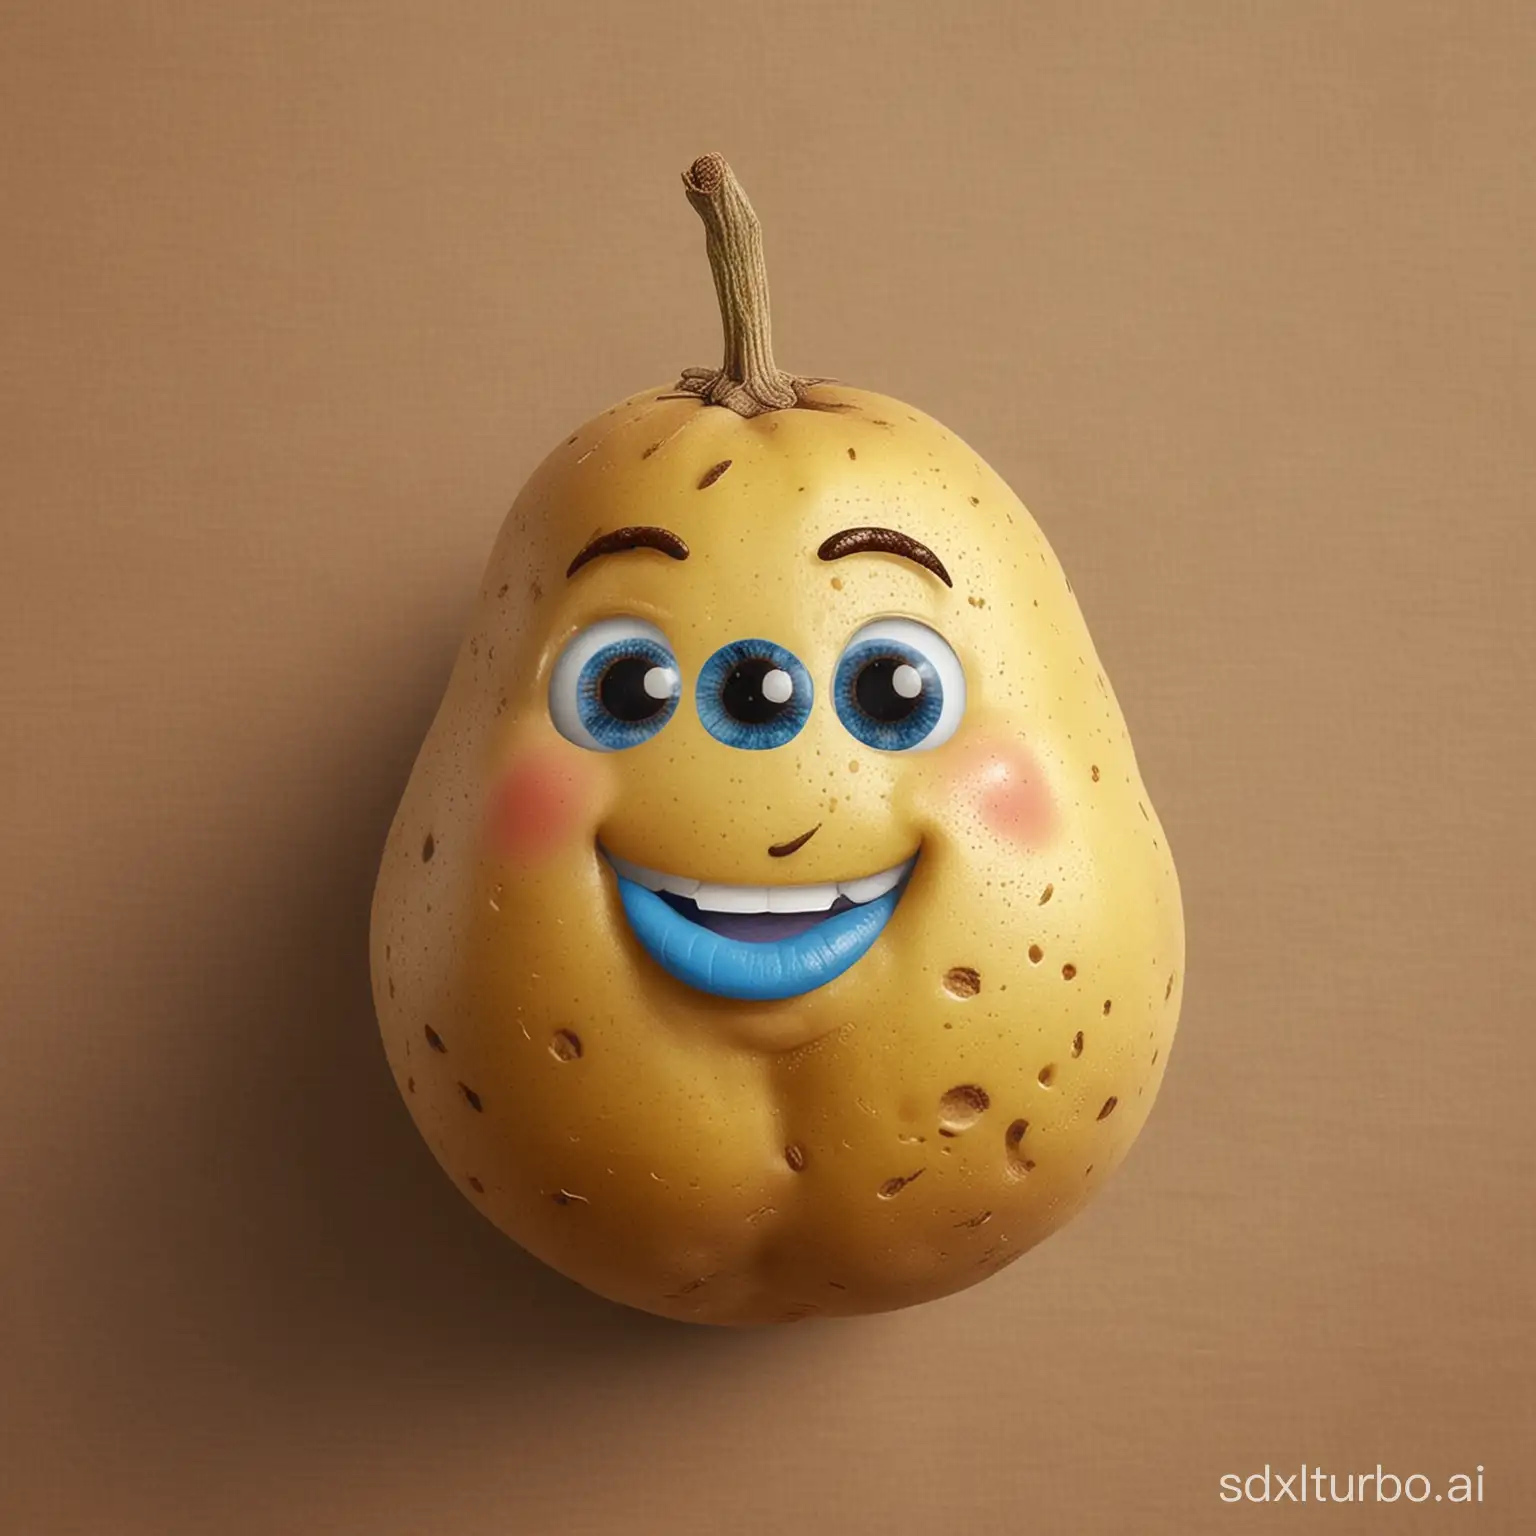 Happy potato. The potato has a bell. The potato has a yellow body, blue eyes, and a brown face.